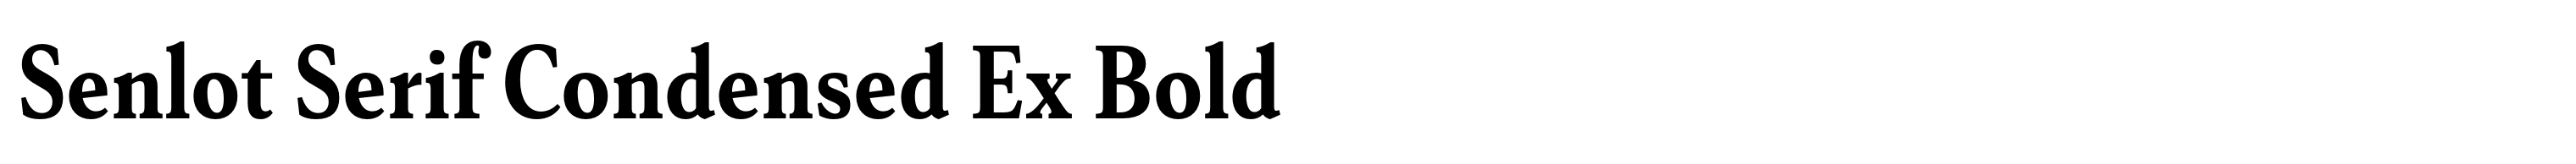 Senlot Serif Condensed Ex Bold